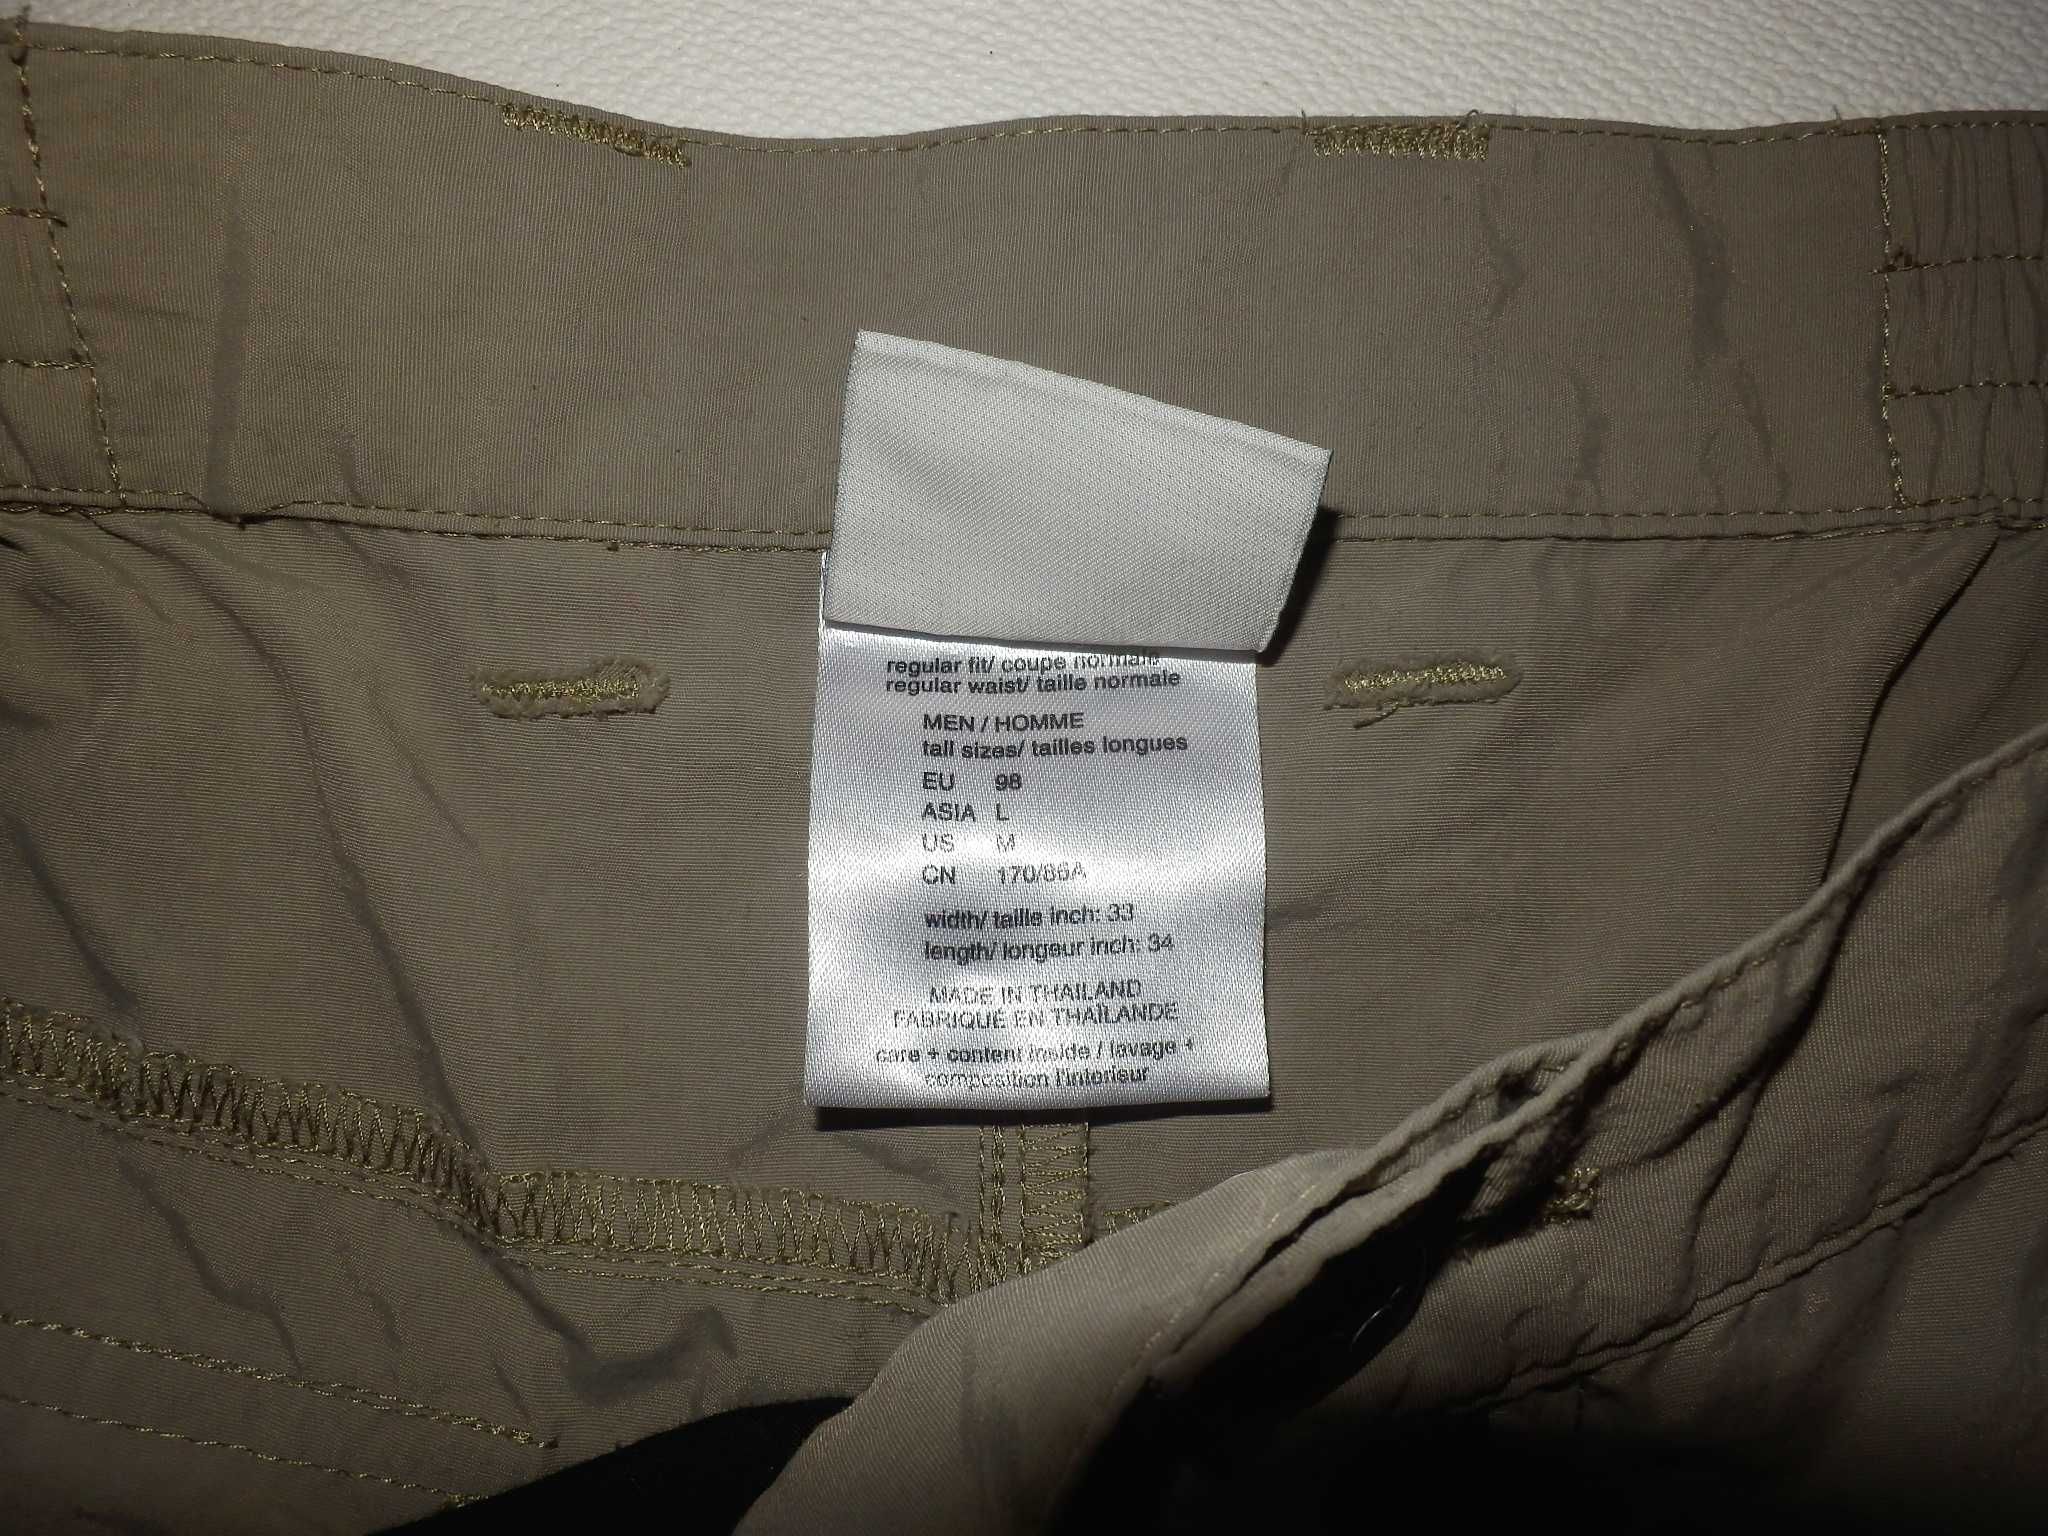 Pantaloni JACK WOLFSKIN detasabili UV Shield (barbati M) cod-557939